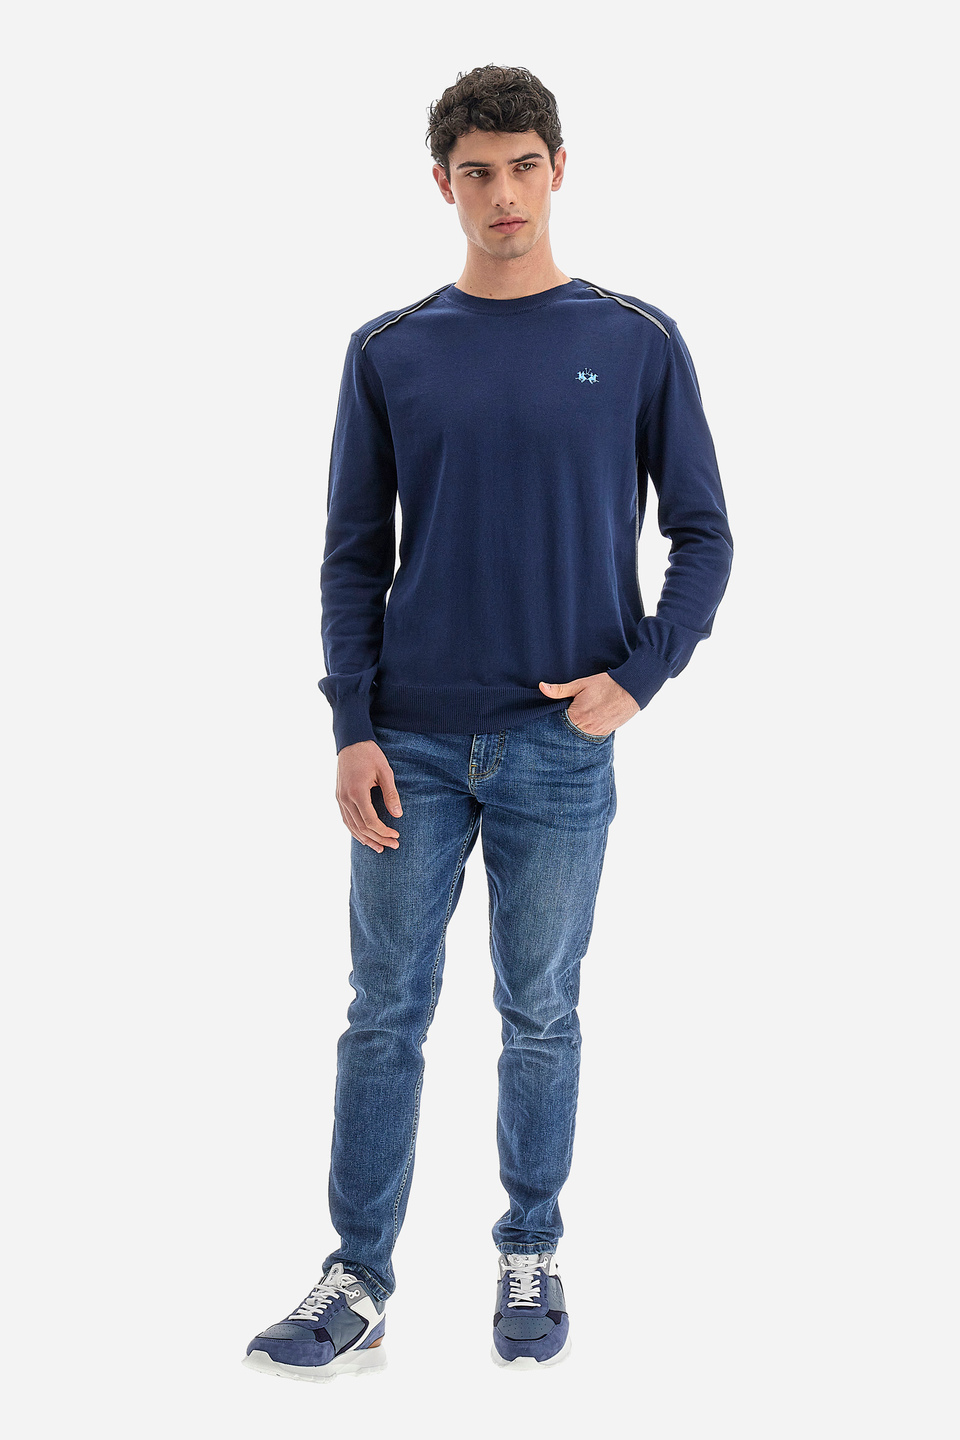 Regular fit 100% cotton men's long-sleeved sweater - Vasily | La Martina - Official Online Shop